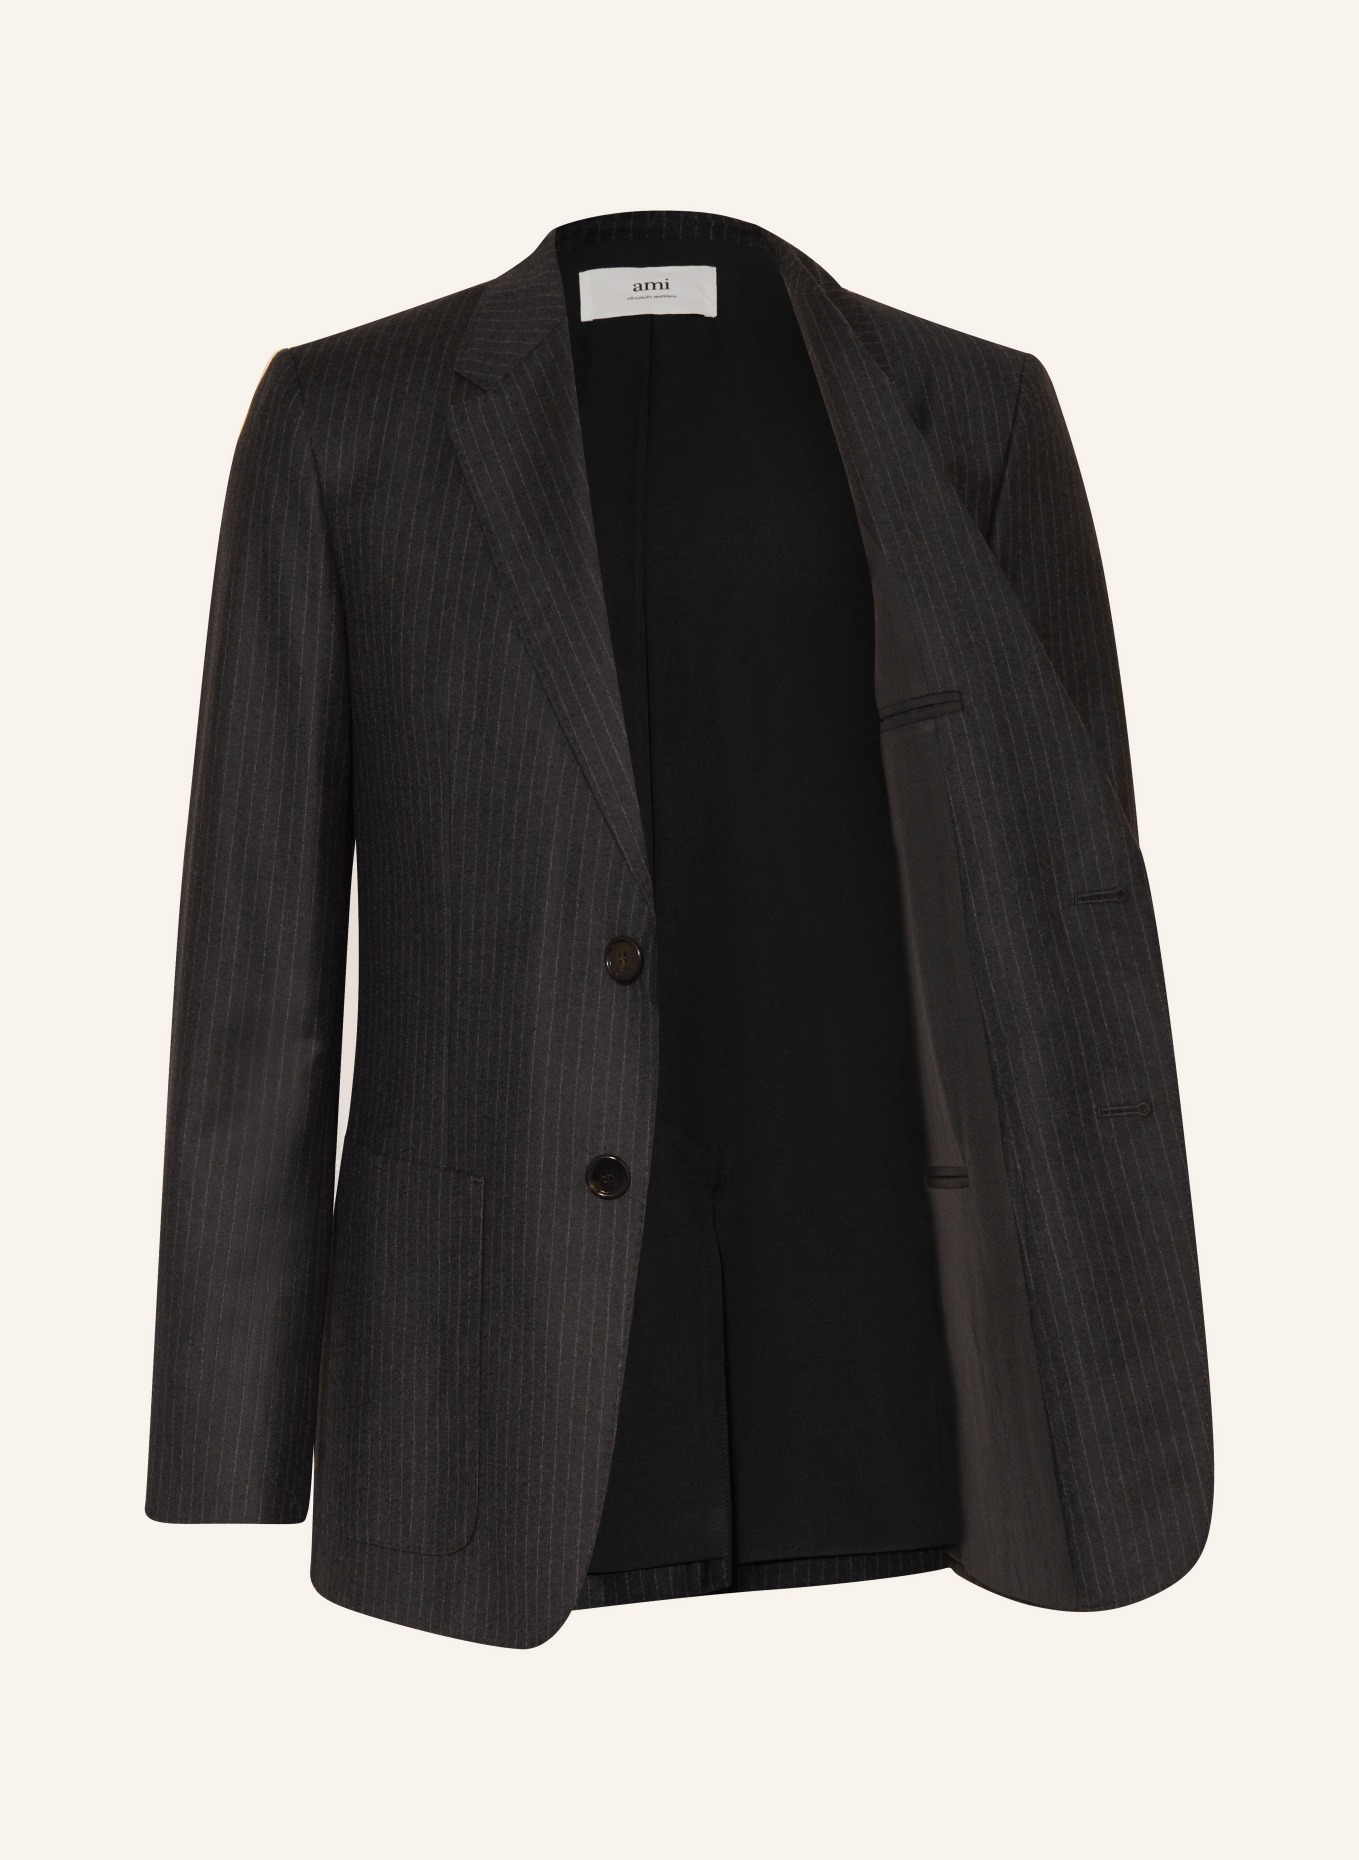 AMI PARIS Suit jacket regular fit, Color: DARK GRAY/ GRAY (Image 5)